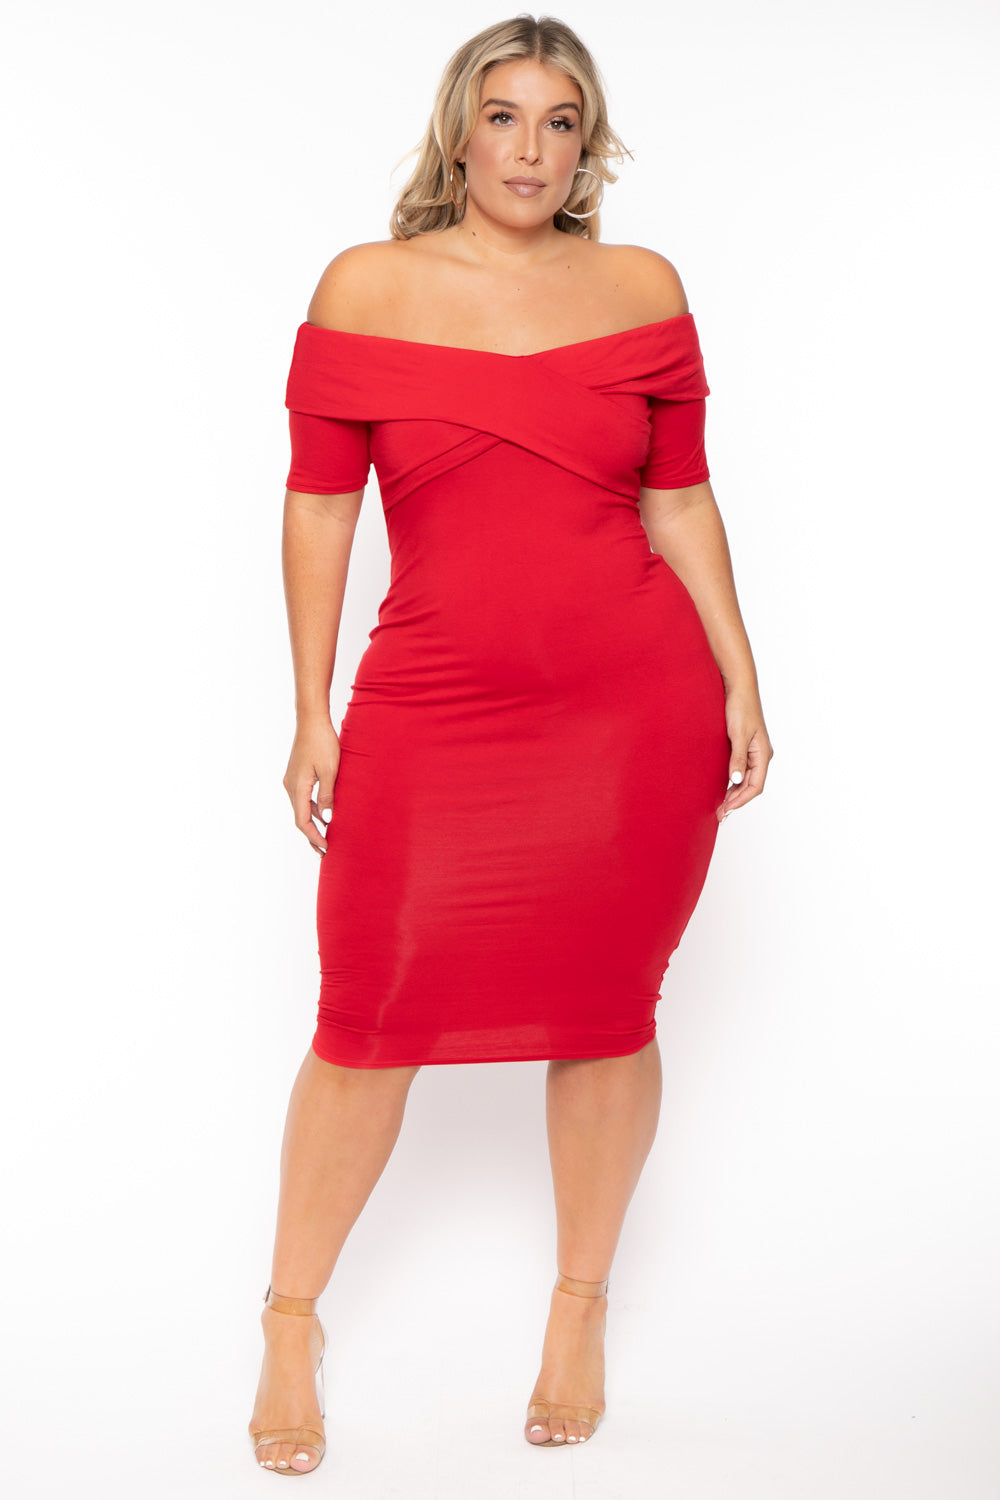 Curvy Sense Dresses Plus Size Lydia Off the Shoulder Short Sleeve Dress- Red